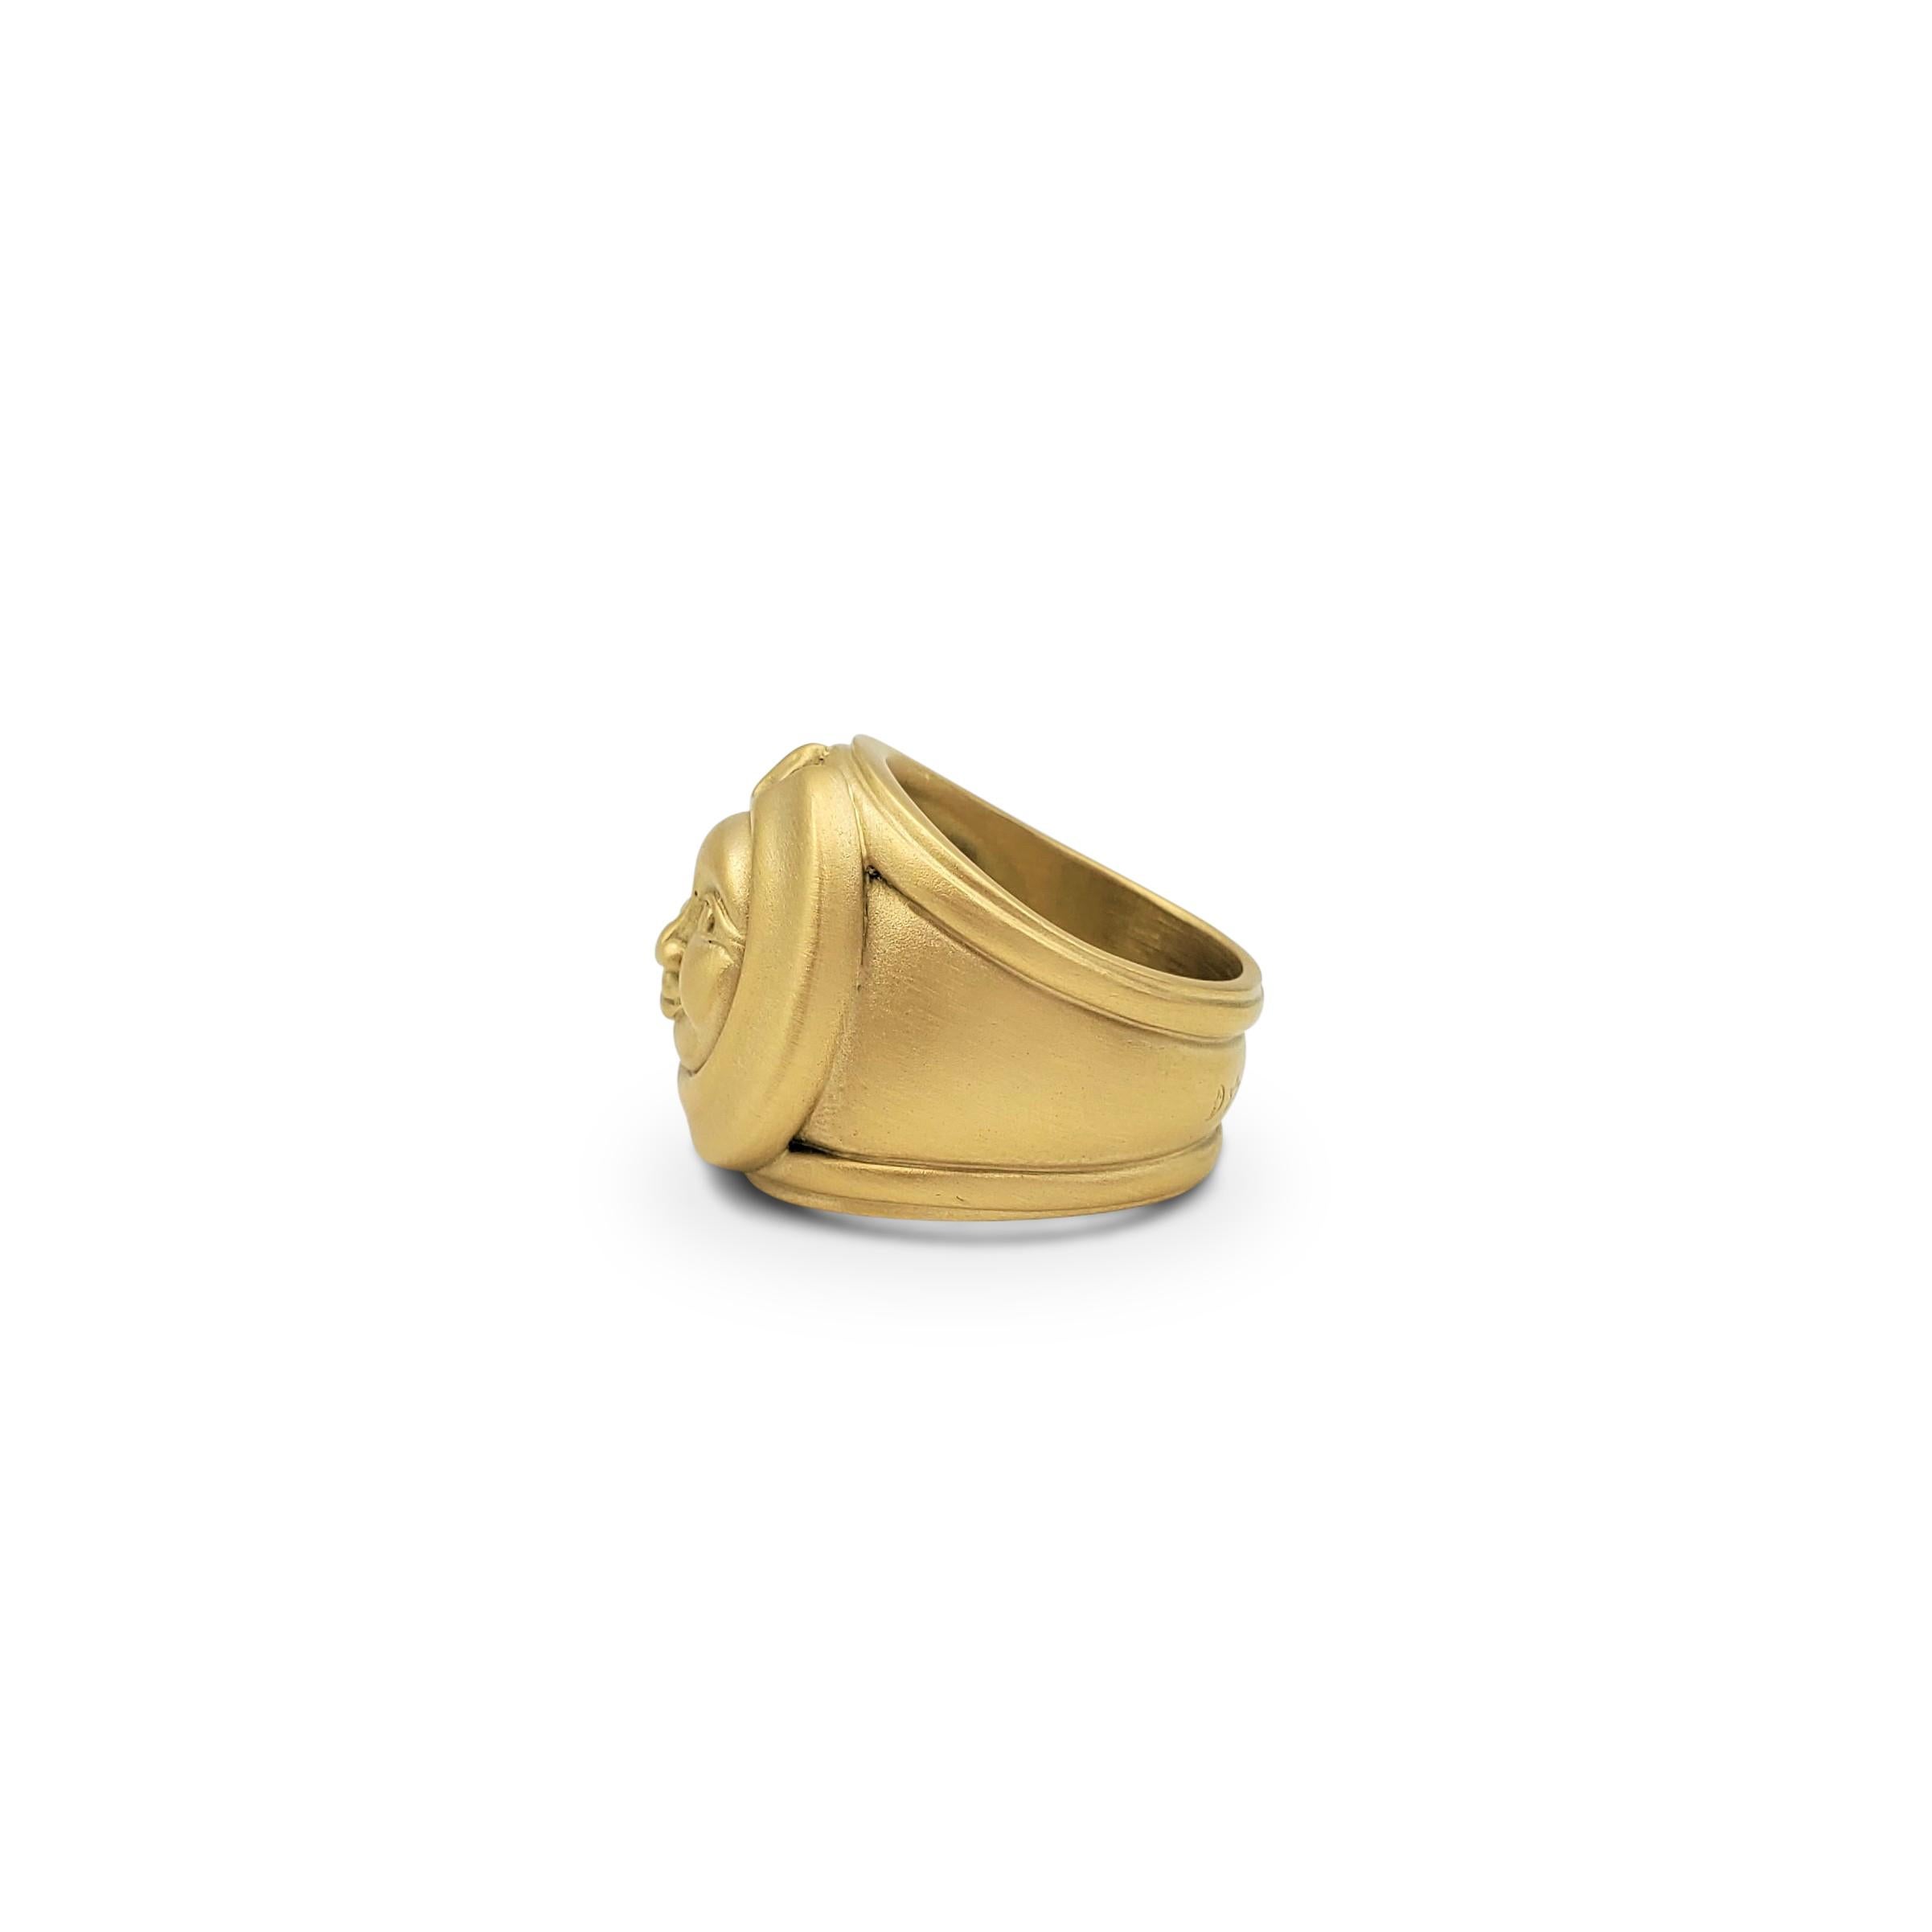 sun design gold ring